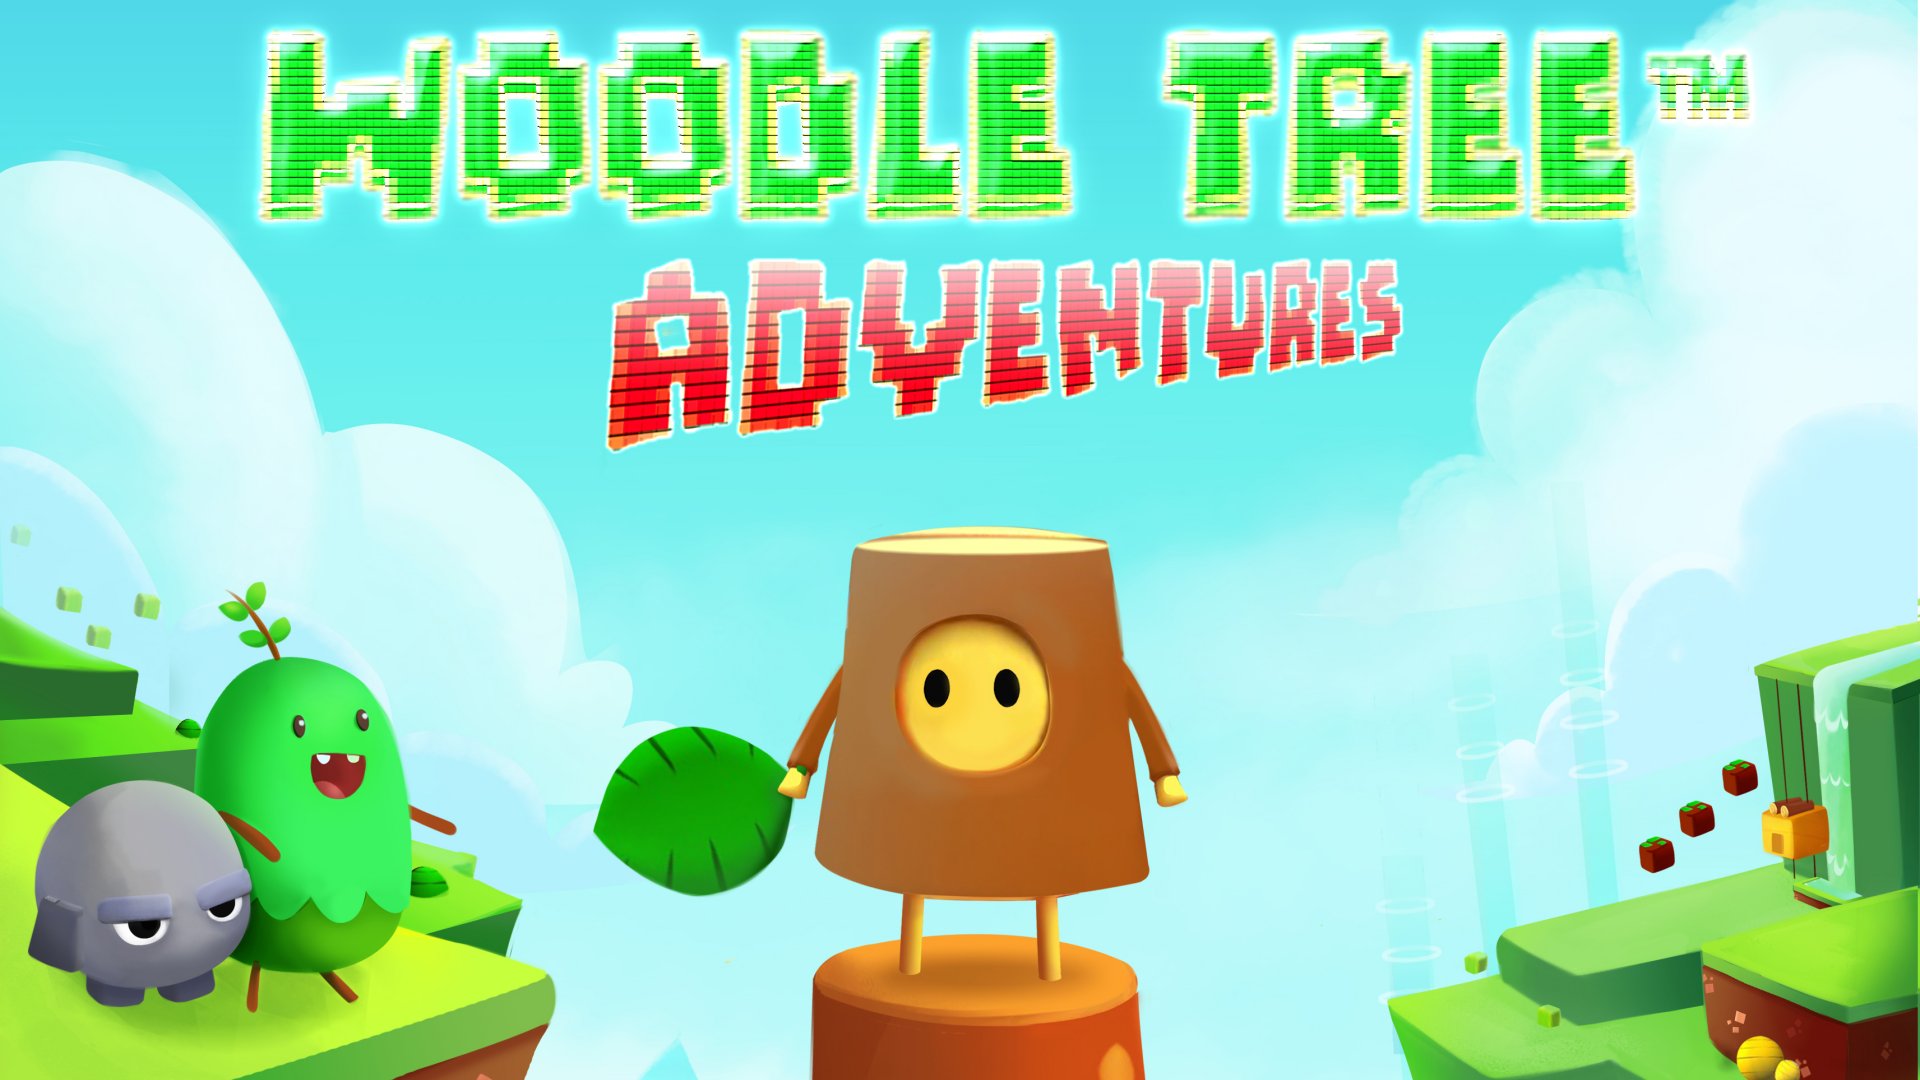 Woodle Tree Adventures